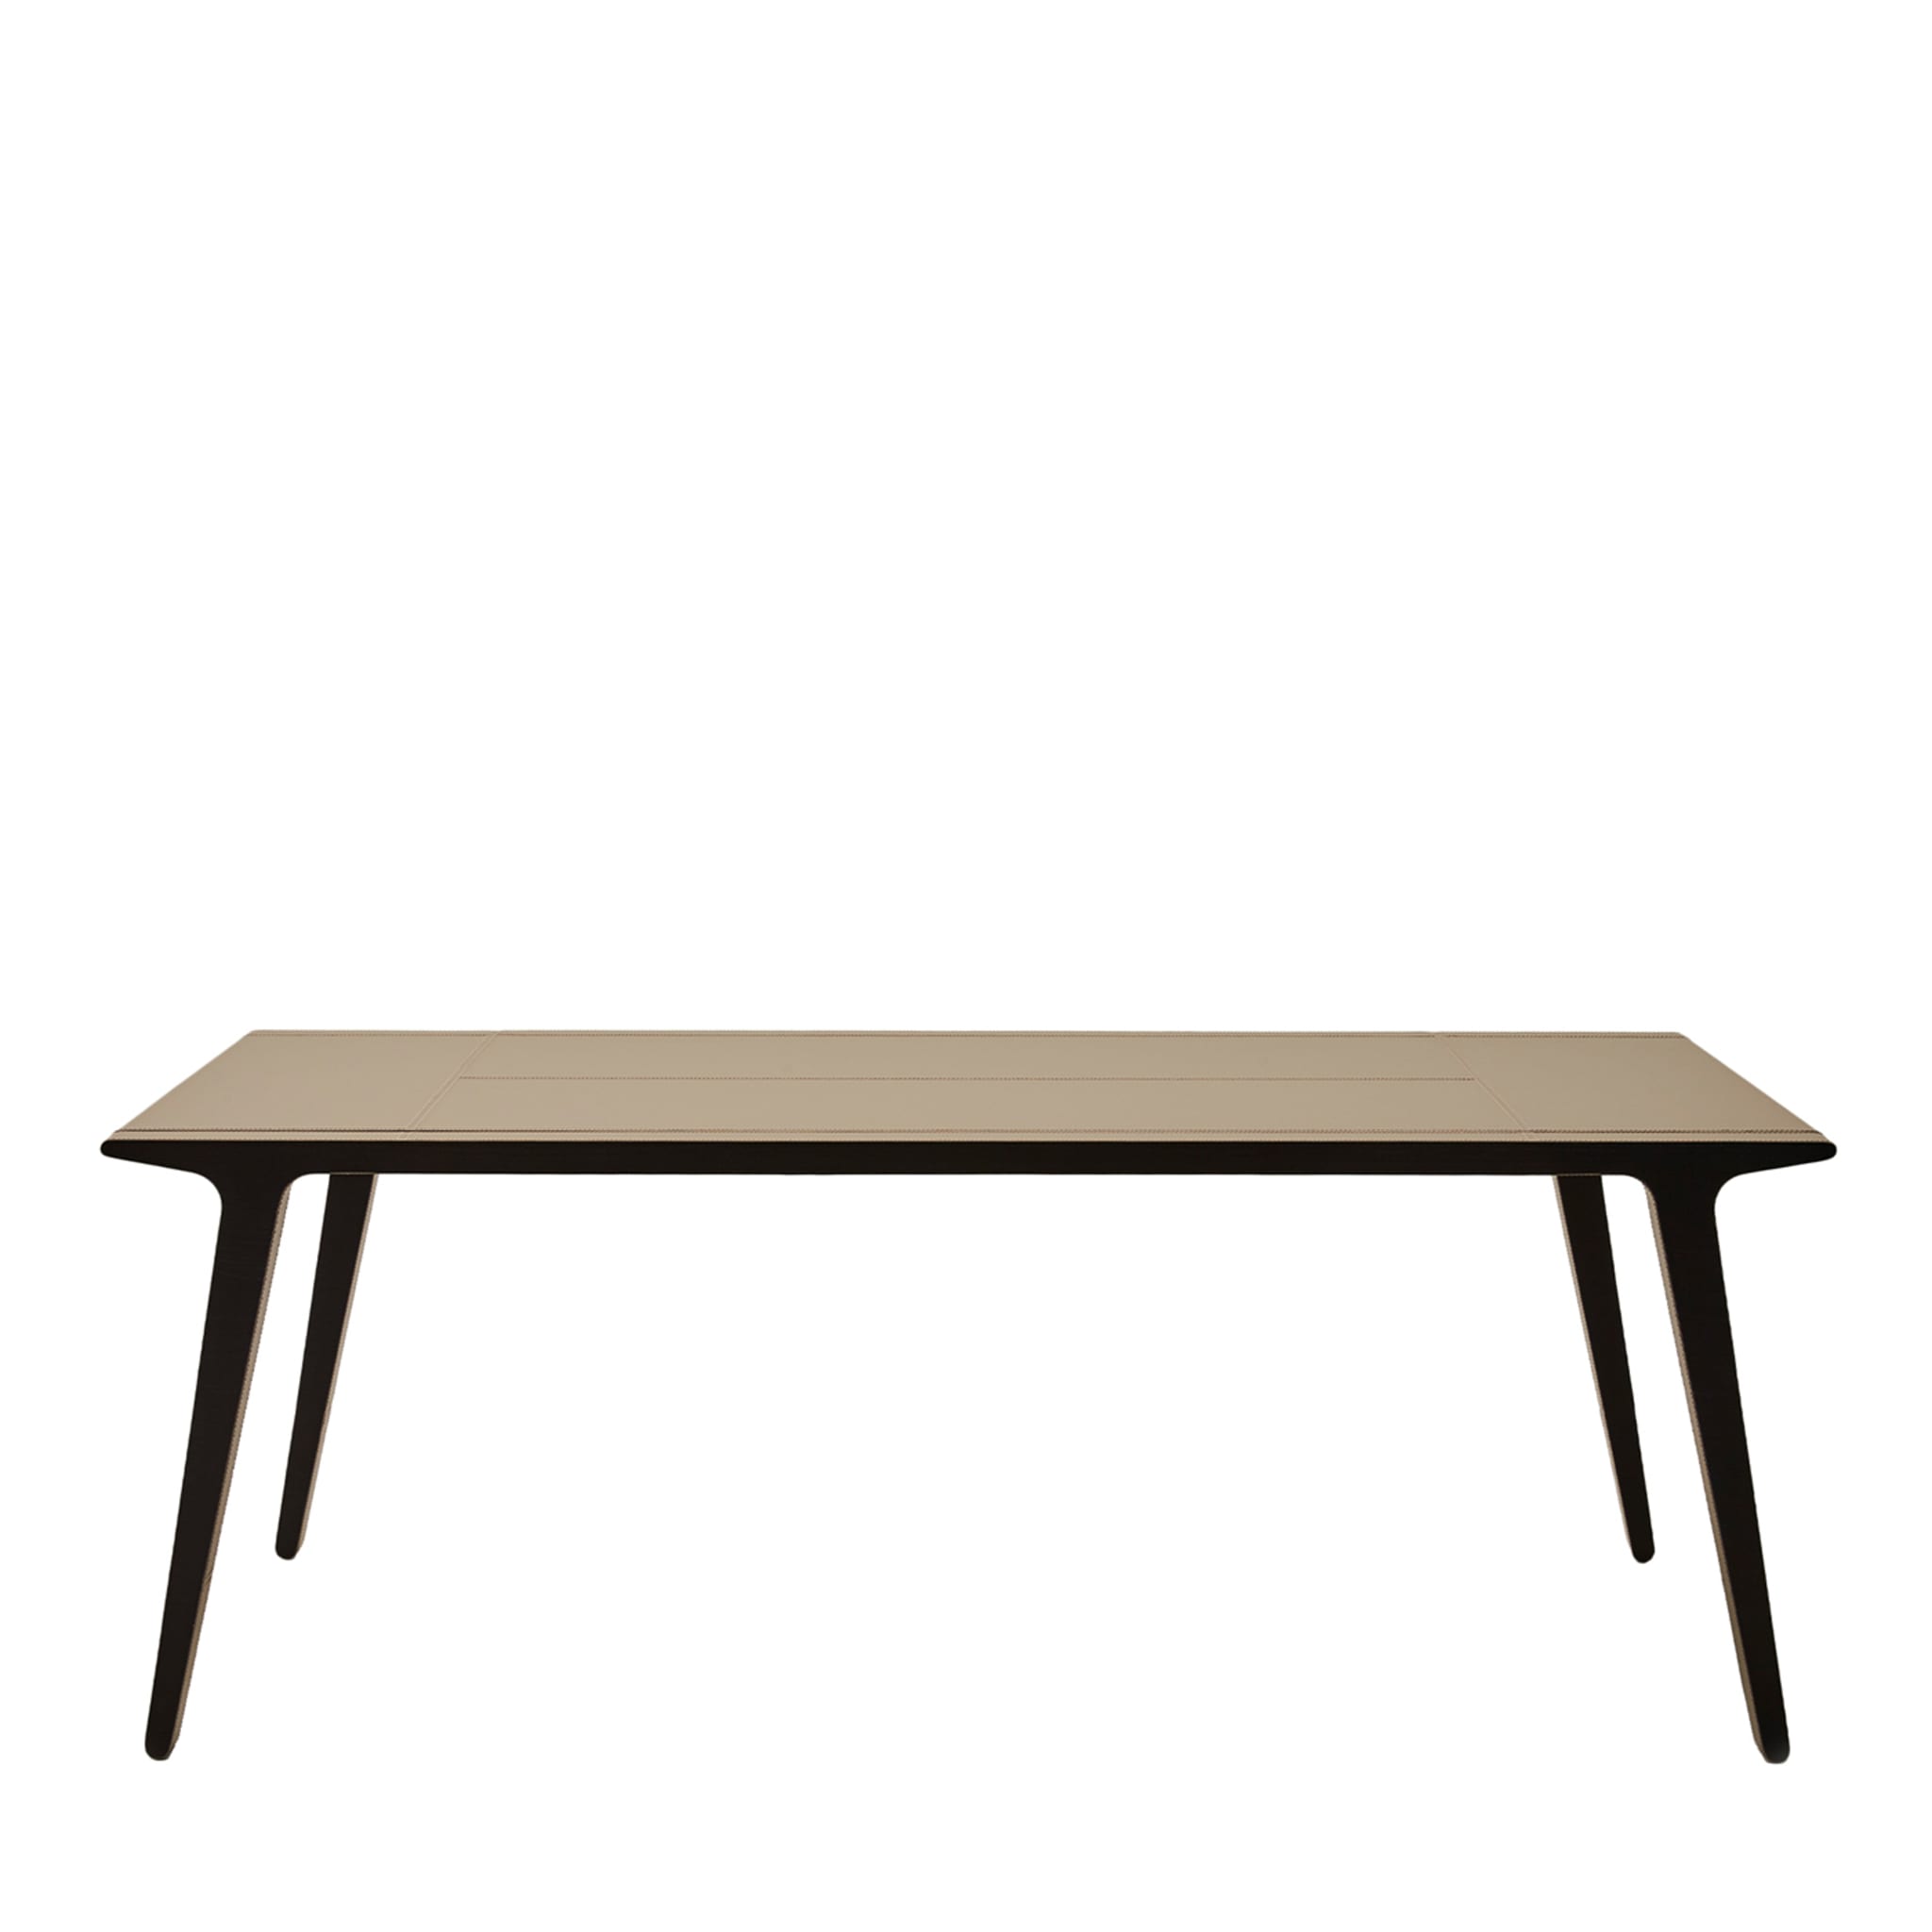 Laicon Taupe & Dark-Durmast Table by Nicola Romanelli - Main view